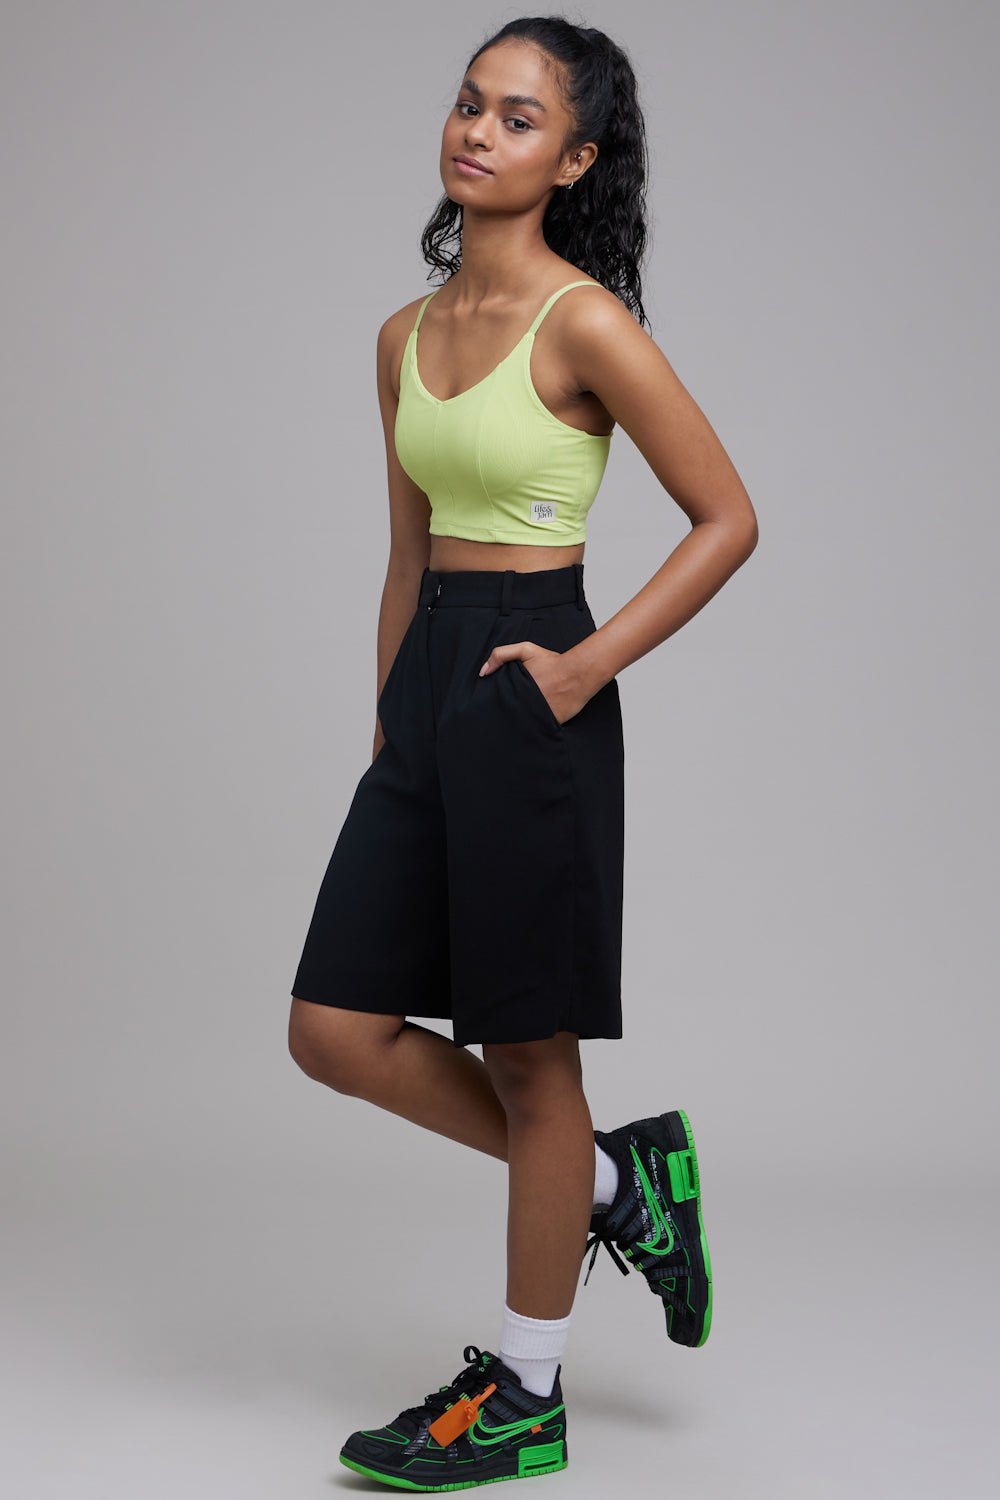 Buy Reebok Lime Green Padded Sports Bra for Women Online @ Tata CLiQ